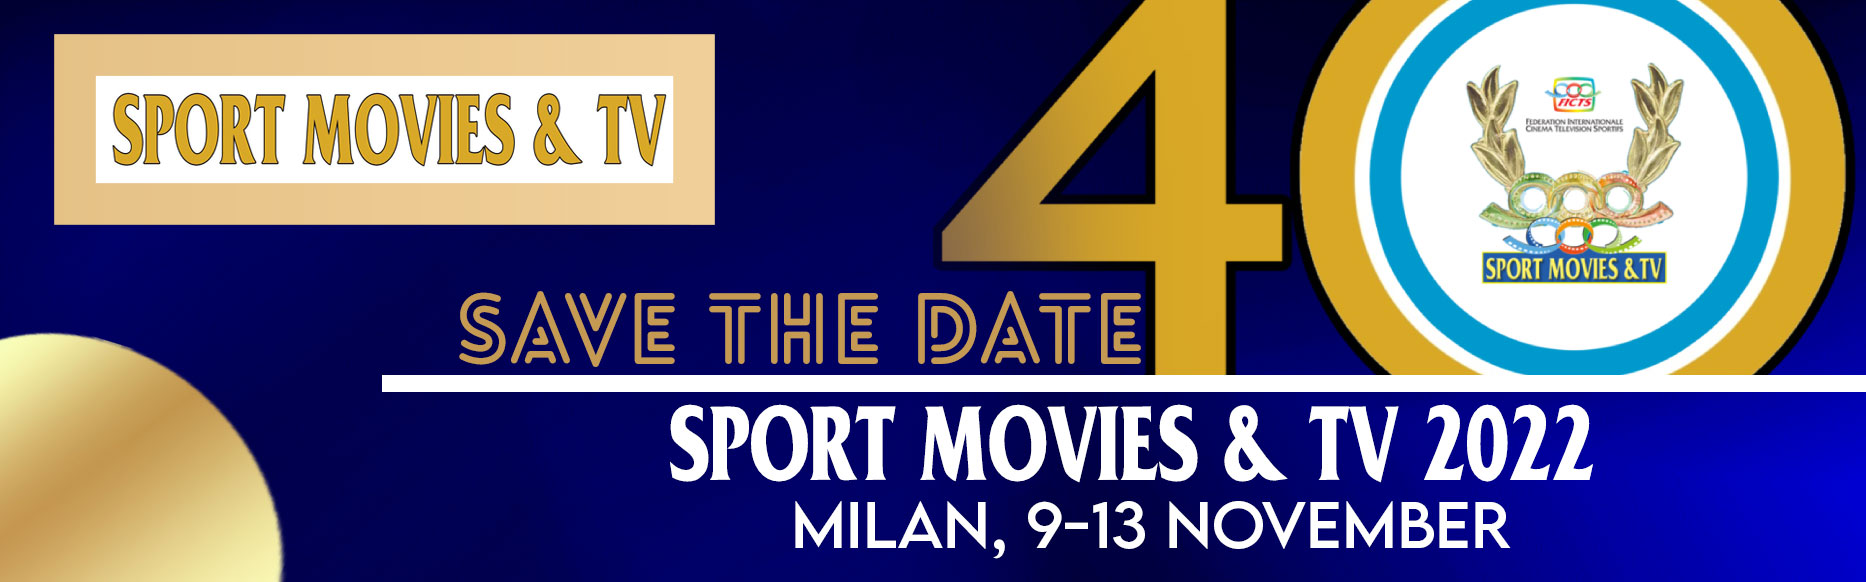 SPORT MOVIES & TV 2022 – MILANO INTERNATIONAL FICTS FEST